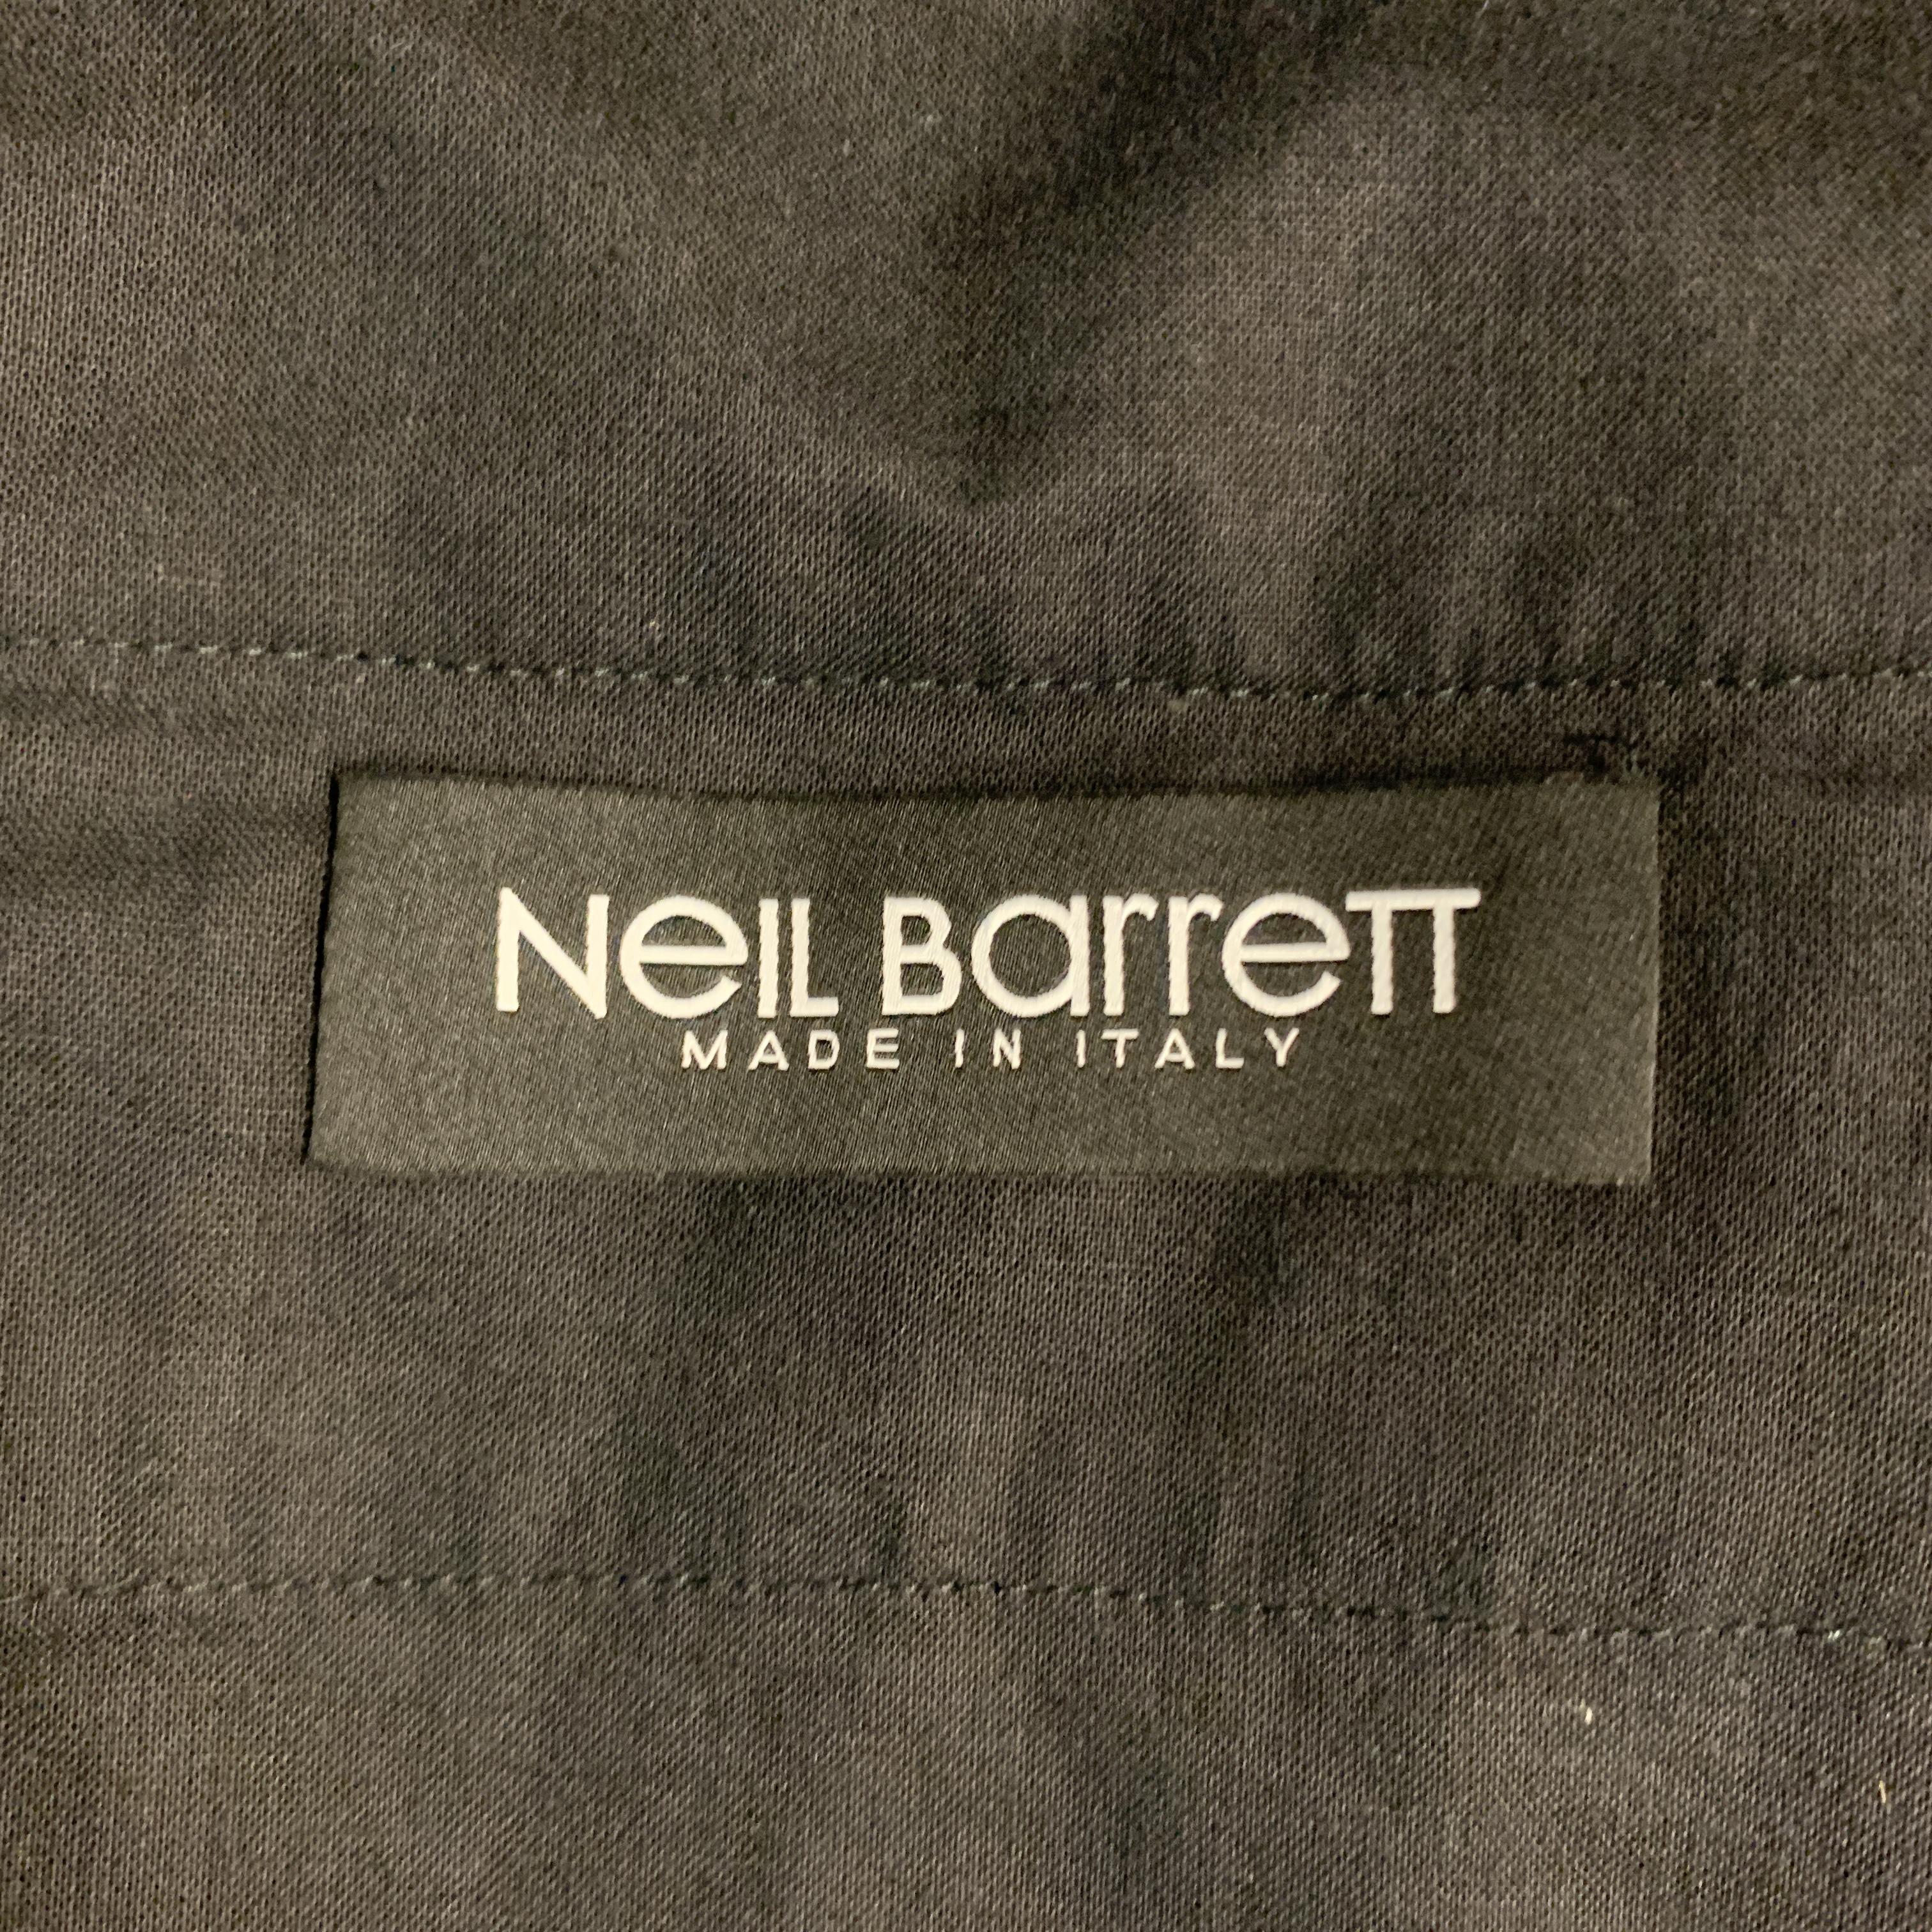 NEIL BARRETT S/S 18 Size 32 Navy Wool Blend Tuxedo Dress Pants 2